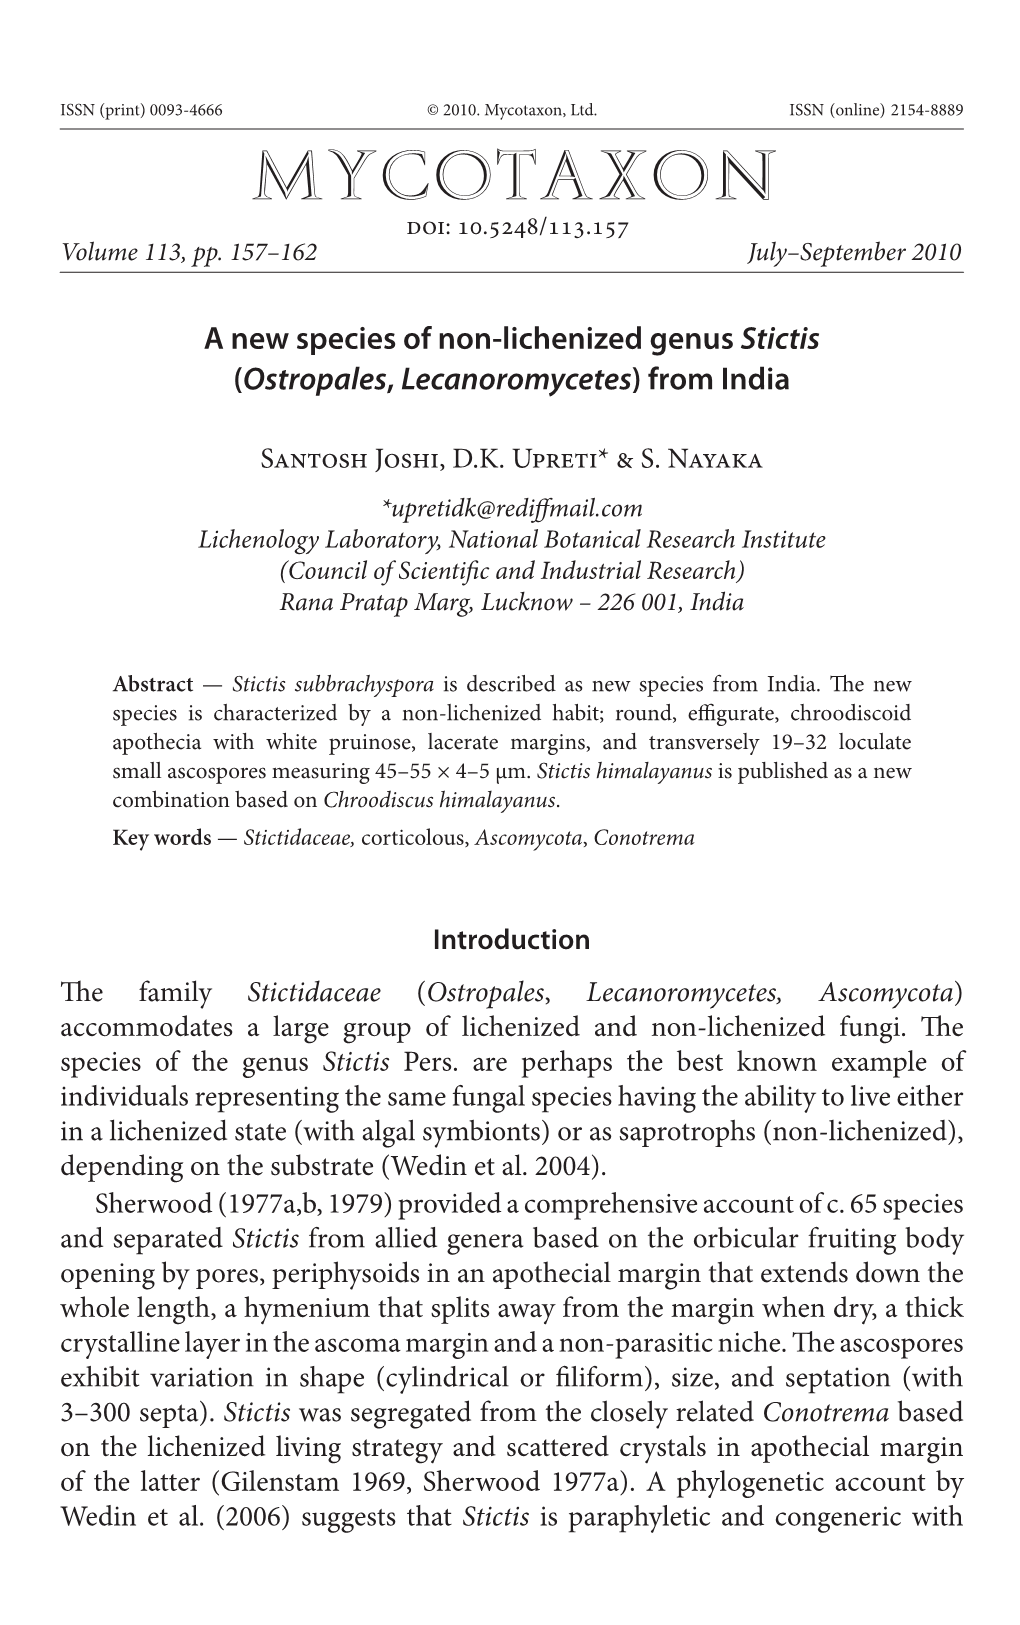 A New Species of Non-Lichenized Genus &lt;I&gt;Stictis